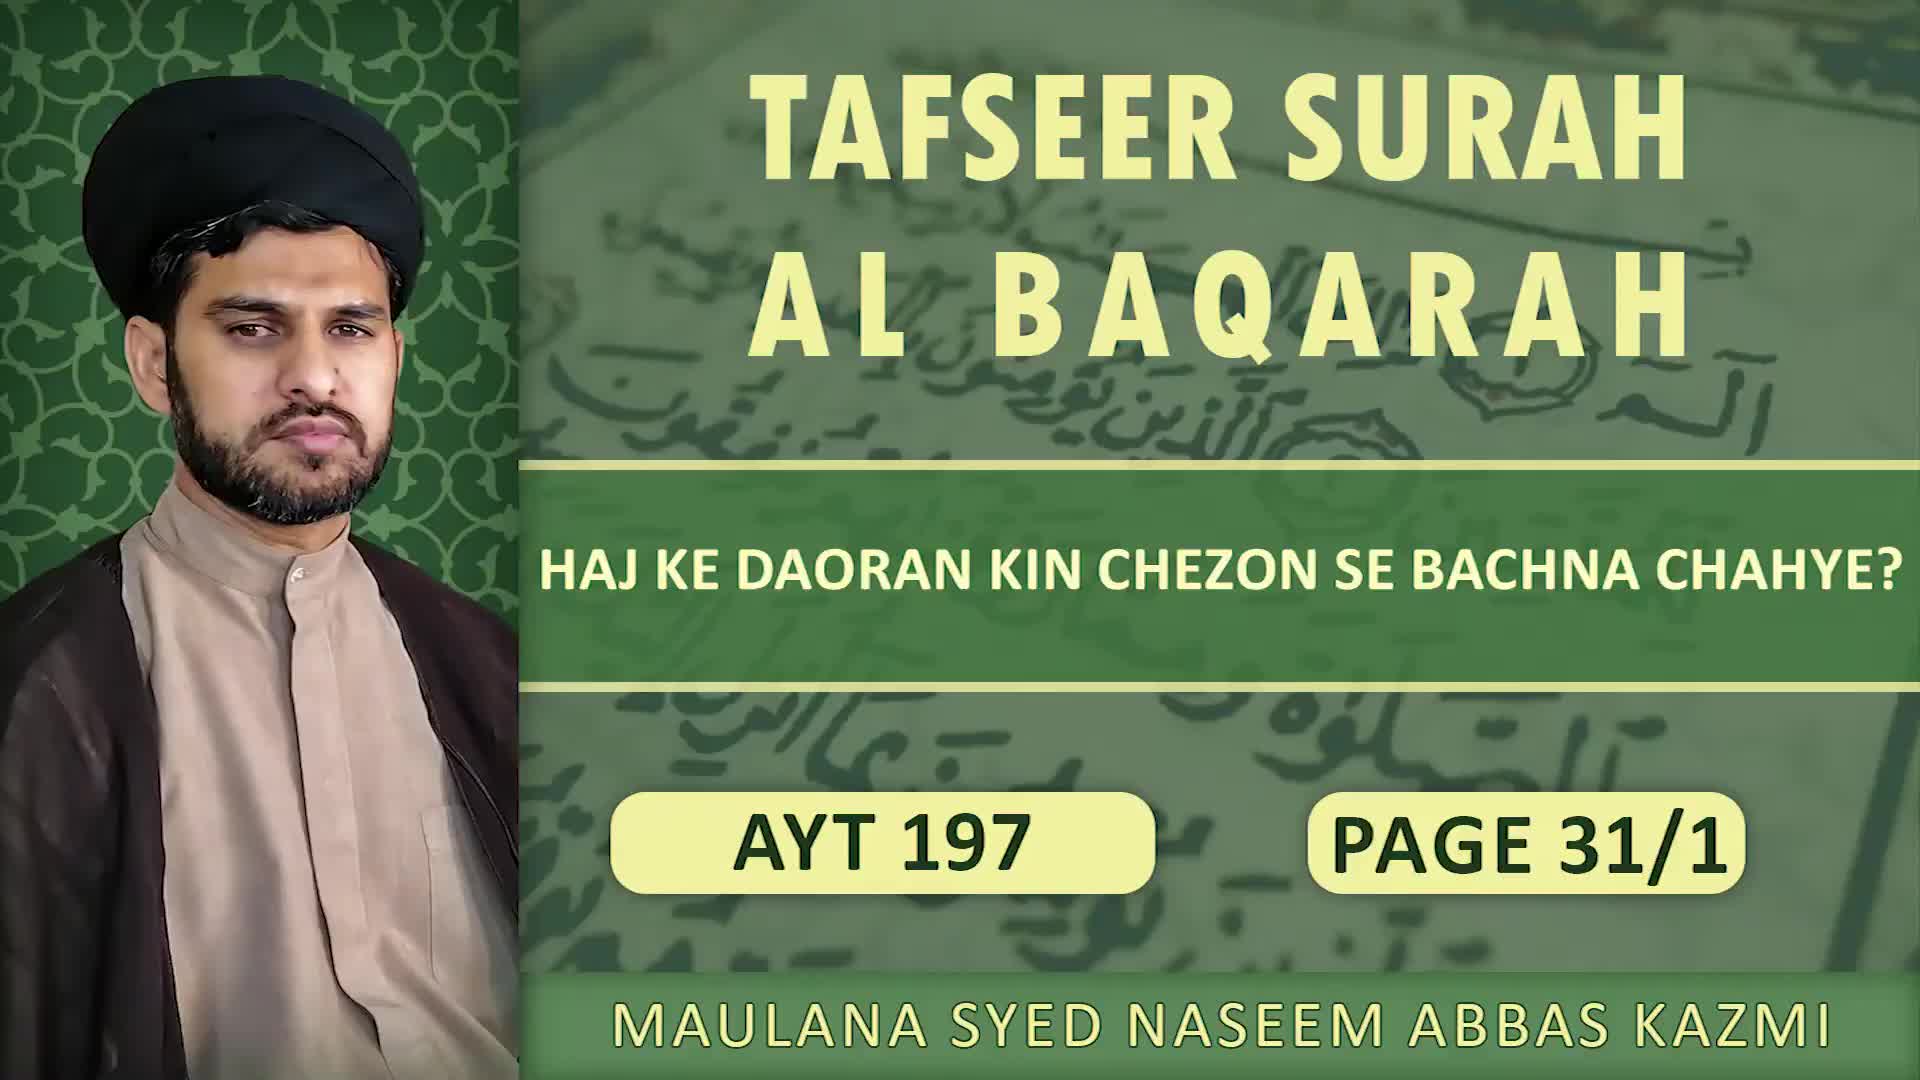 Tafseer e Surah Al Baqarah,Ayt 197 | Haj ke daoran kin chezon se bachna chahye? |Maulana Syed Naseem Abbas kazmi| Urdu